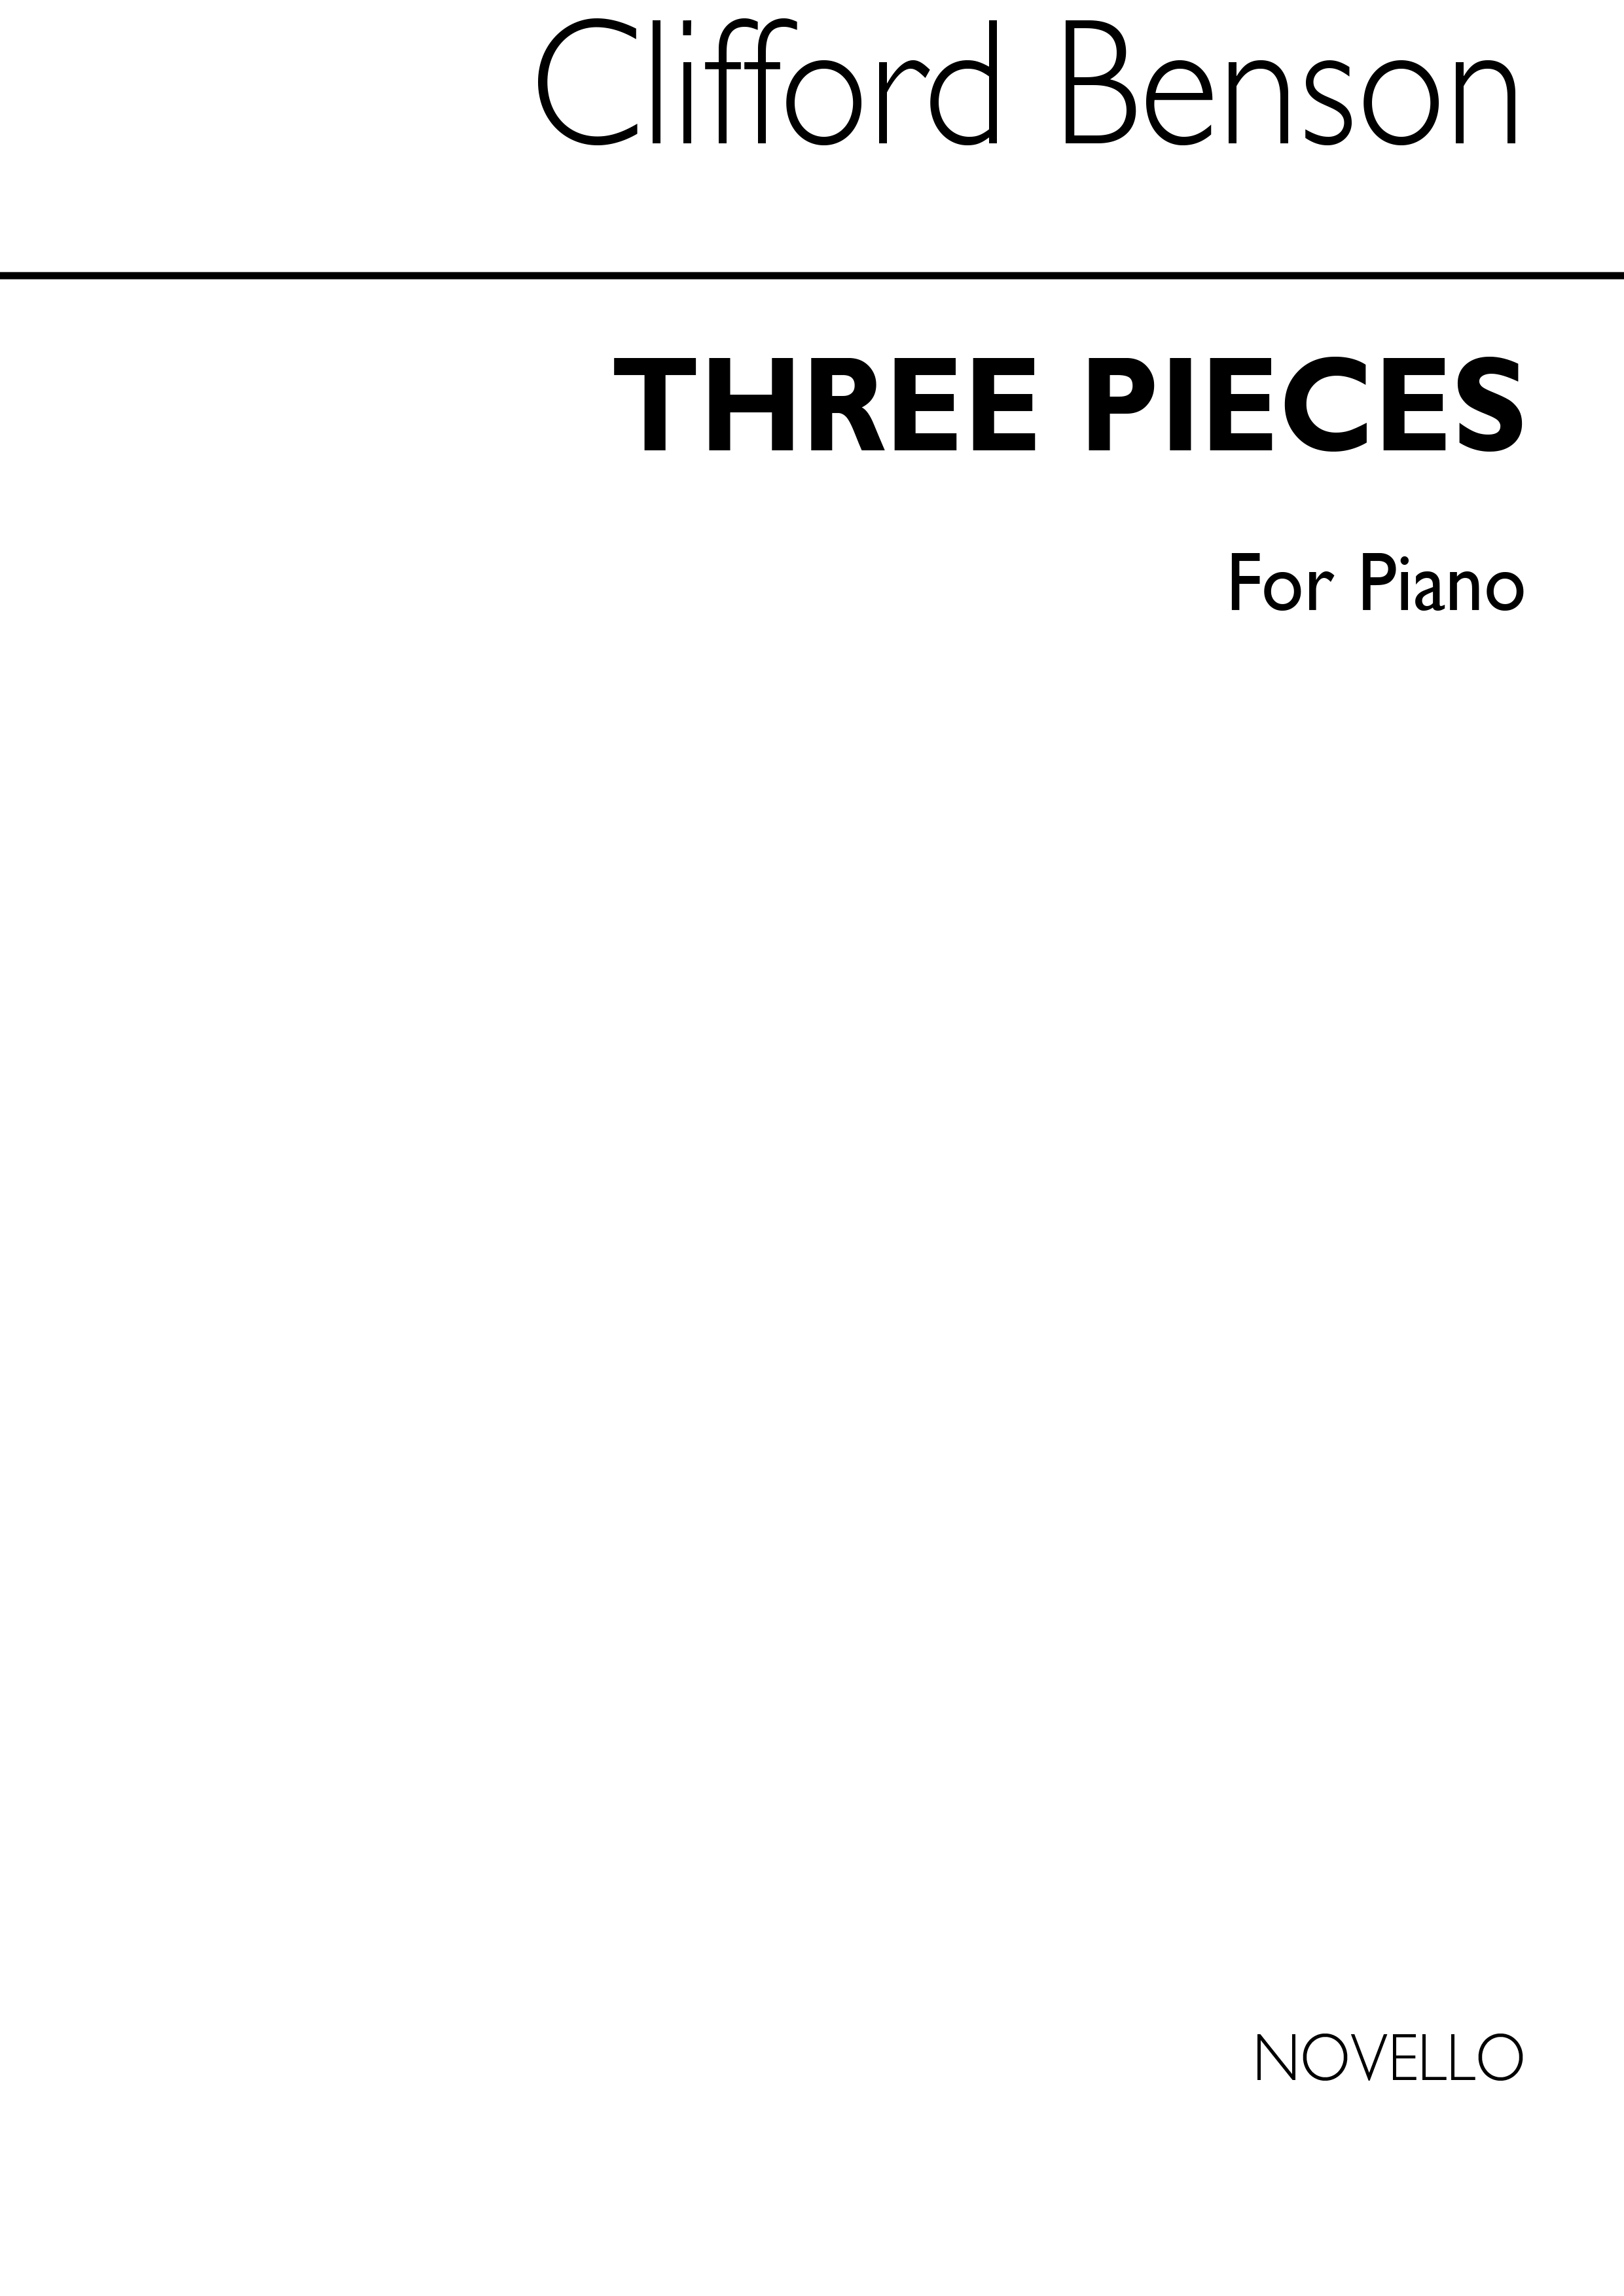 Benson: Three Pieces For Piano